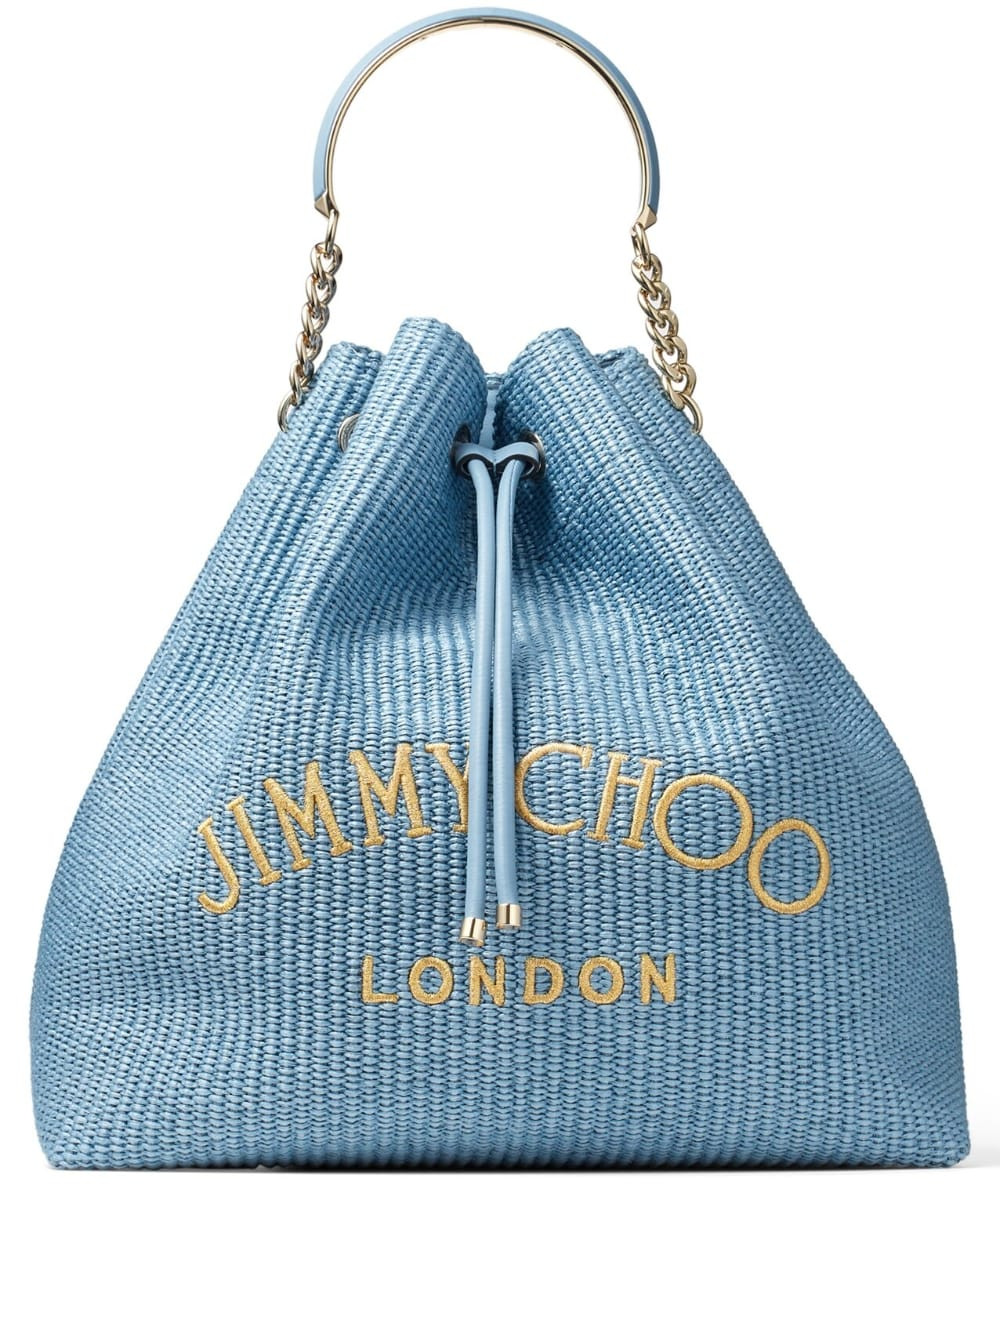 Jimmy Choo Bon bon maxi raffia bucket bag